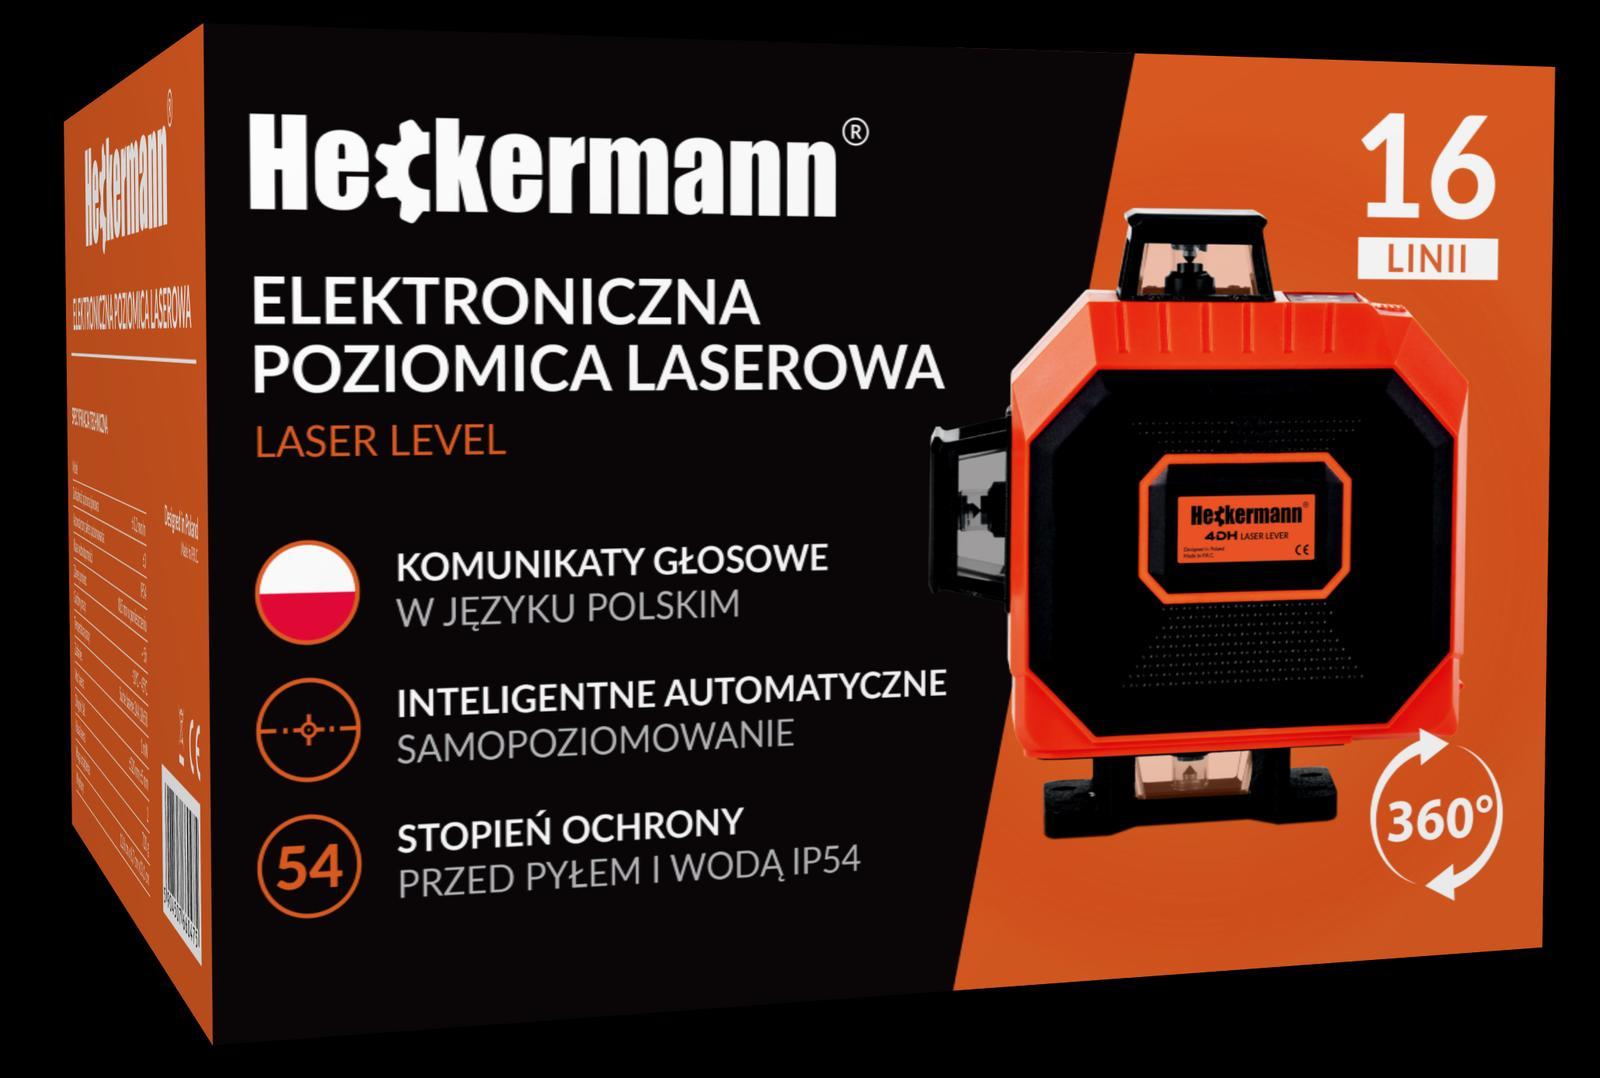 Poziomica laserowa Heckermann 16 linii 4DH NOWA nr. 14